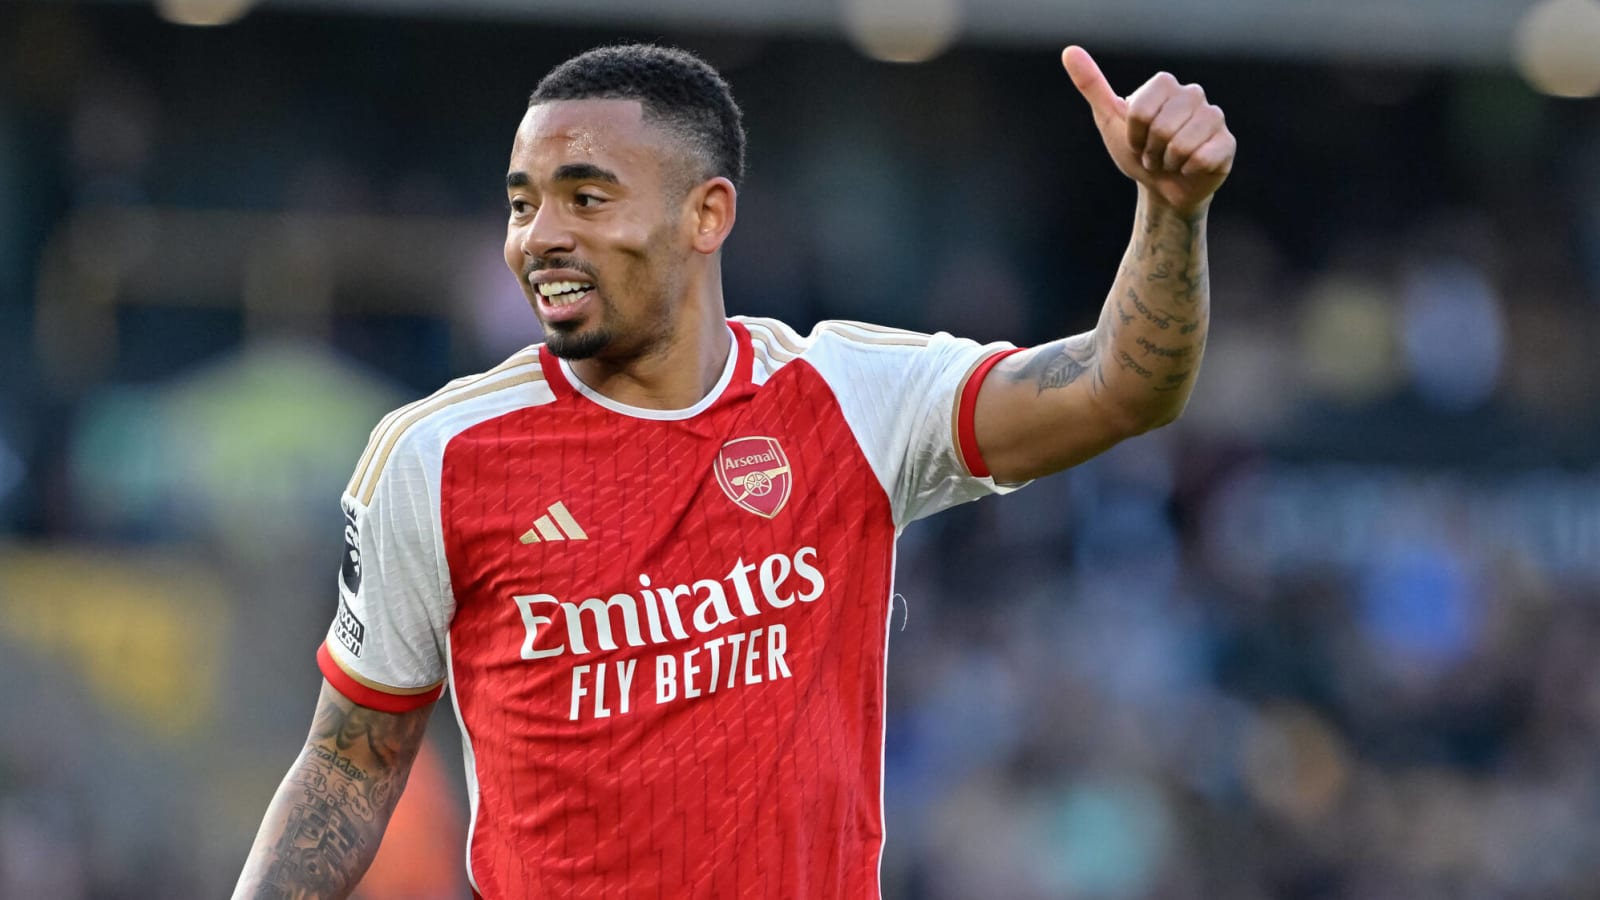 Gabriel Jesus speaks about Arsenal’s return to form after their Dubai trip